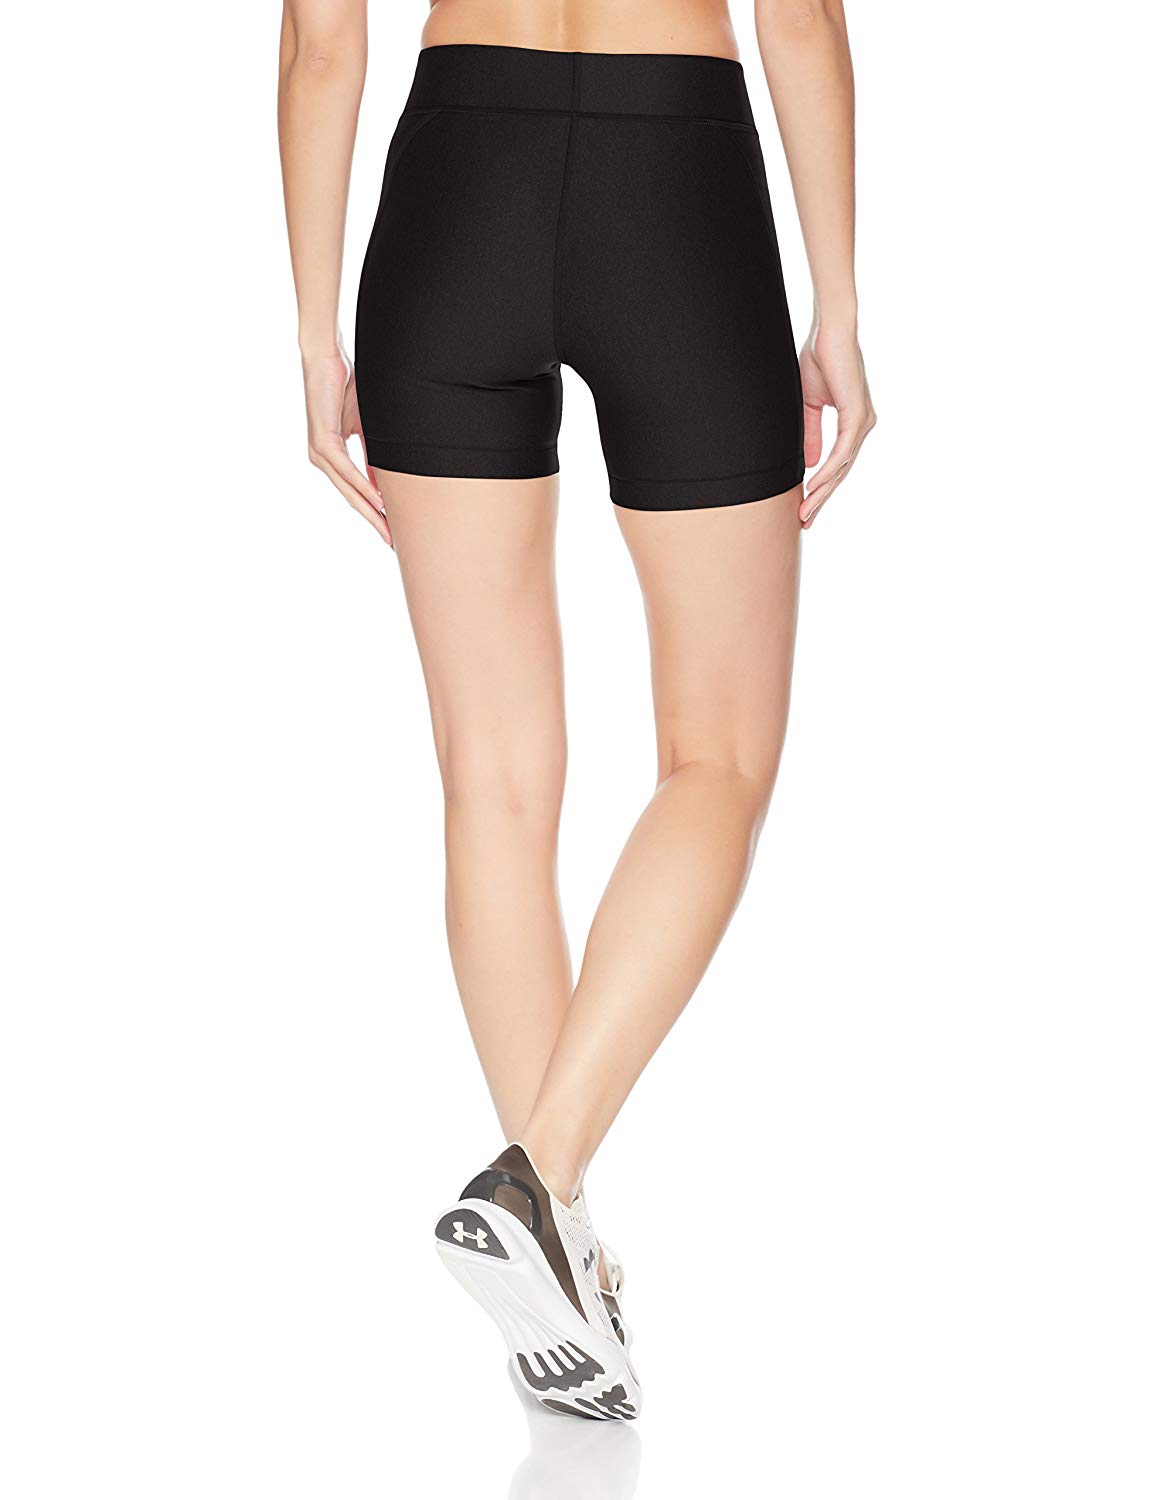 Under Armour Women's HeatGear Middy Shorts, Black, Black, Size Medium ...